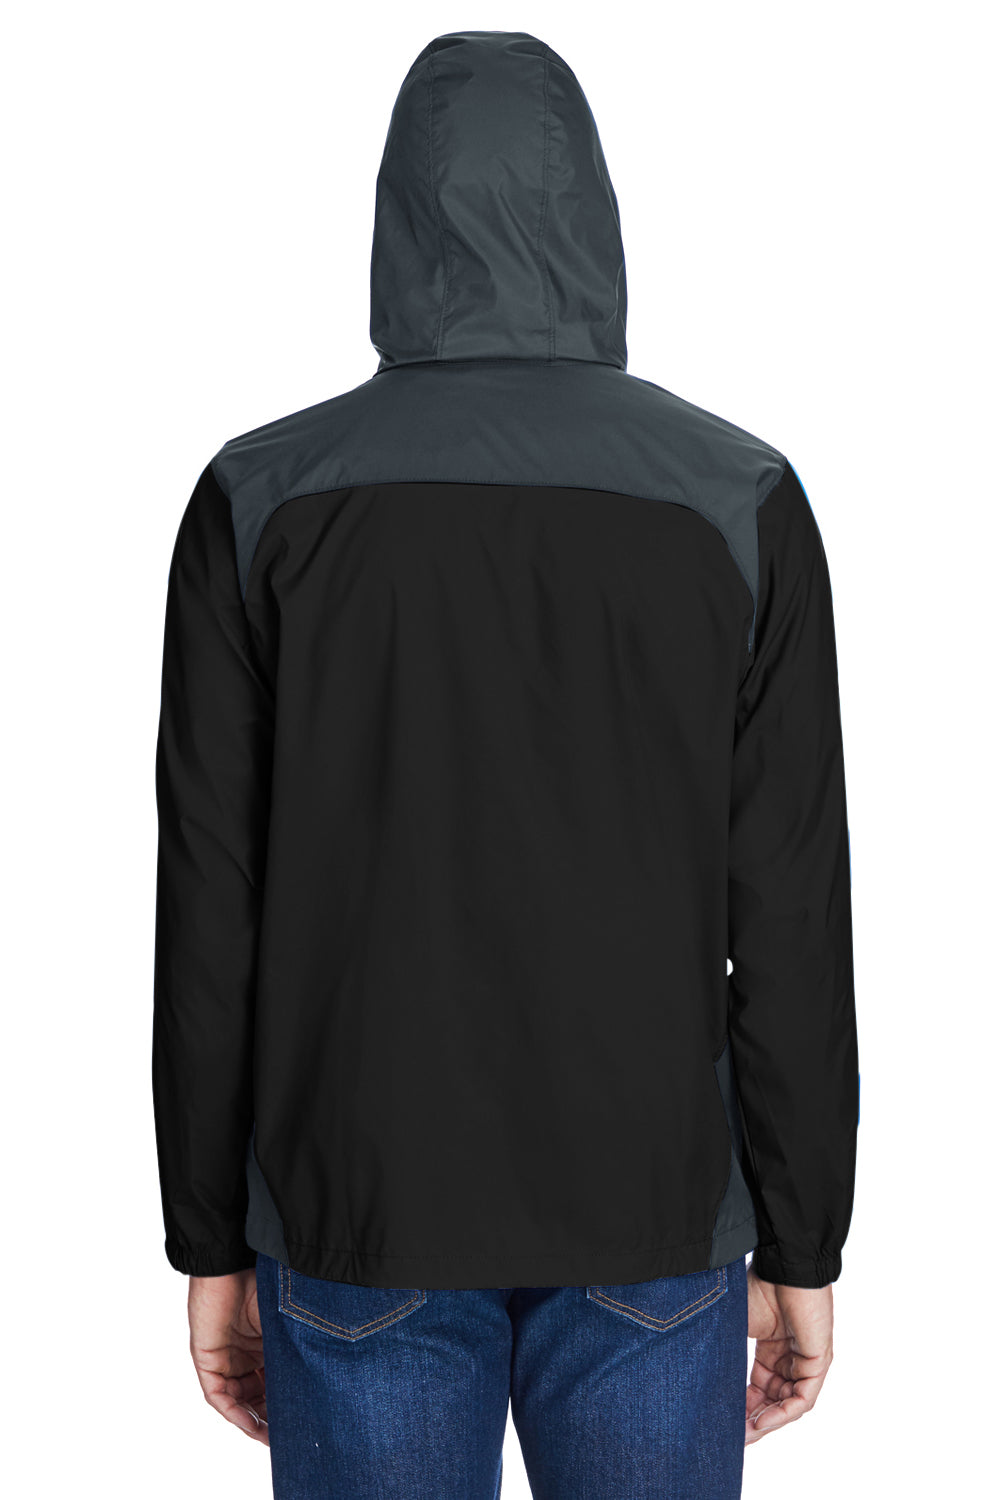 Columbia 2015 Mens Glennaker Lake Waterproof Full Zip Hooded Rain Jacket Black/Grey Back